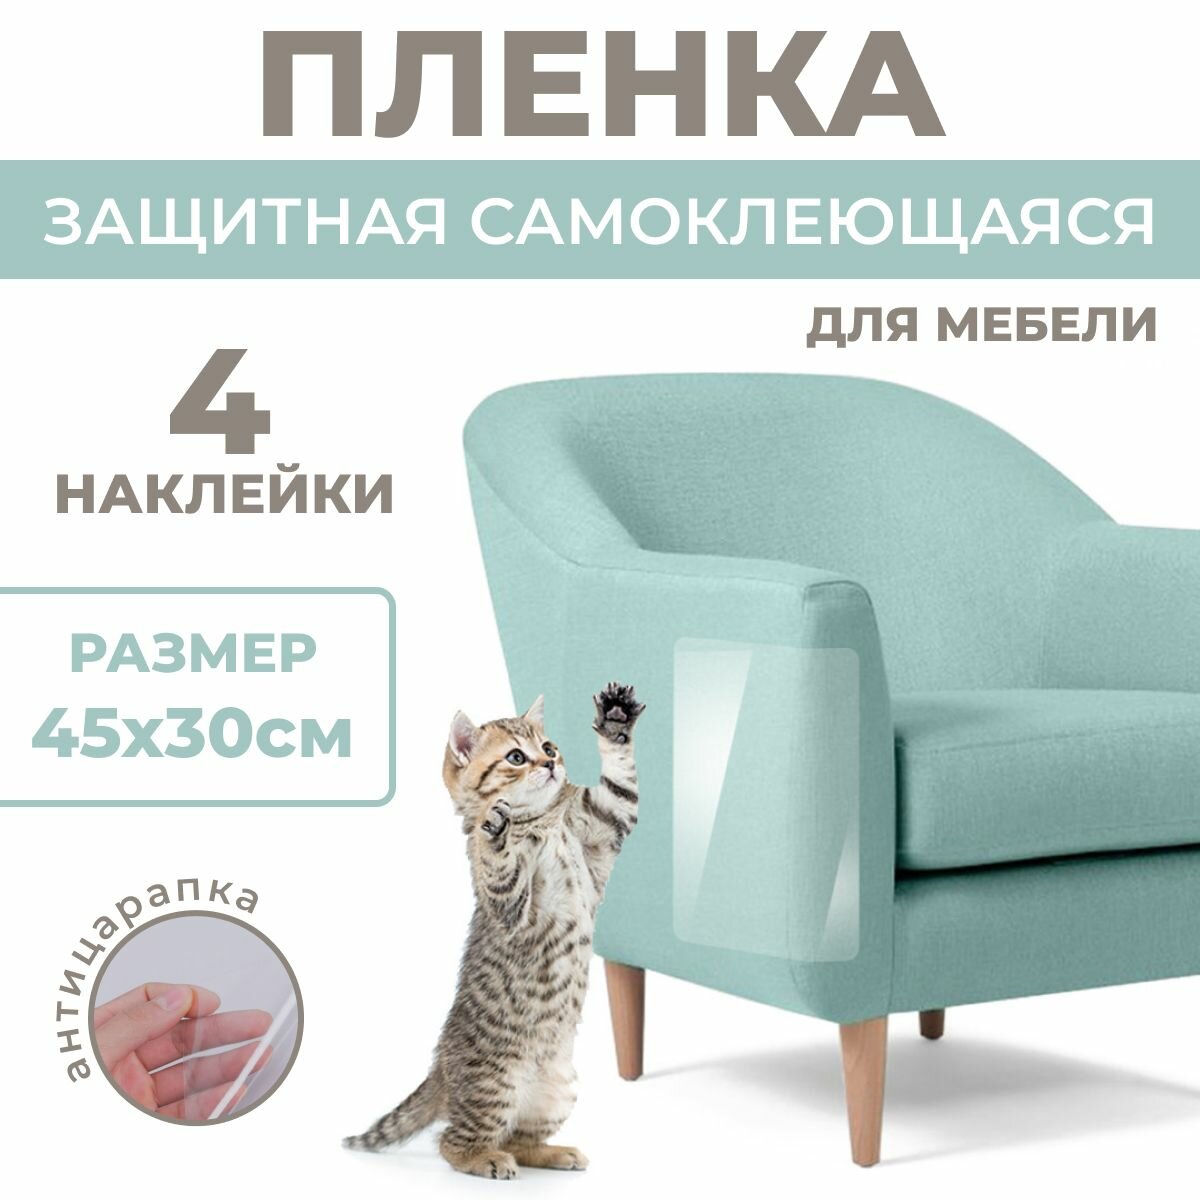 (45x30см, 4 листа) Защитная пленка от кошек для мебели. Самоклеящаяся пленка когтеточка. Наклейка на мебель от кошек.